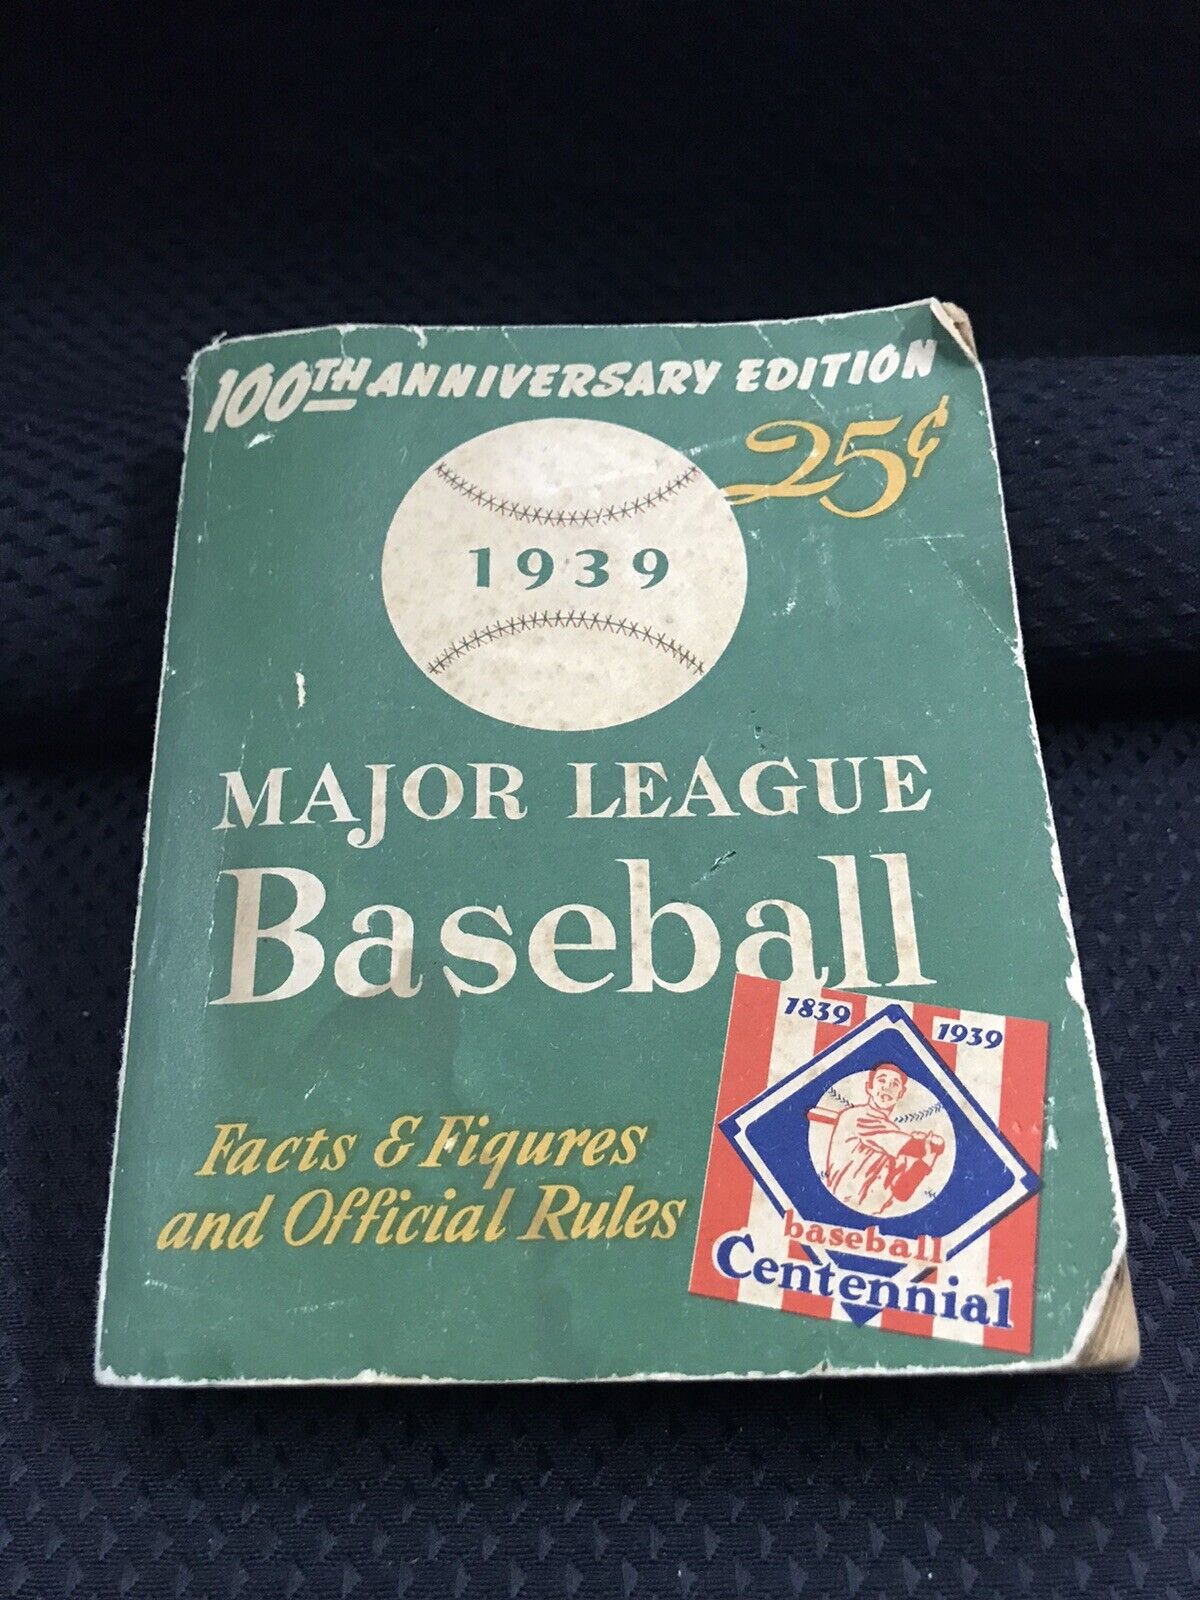 1939 Major League Baseball Facts & Figures vintage book 100 Year Anniversary